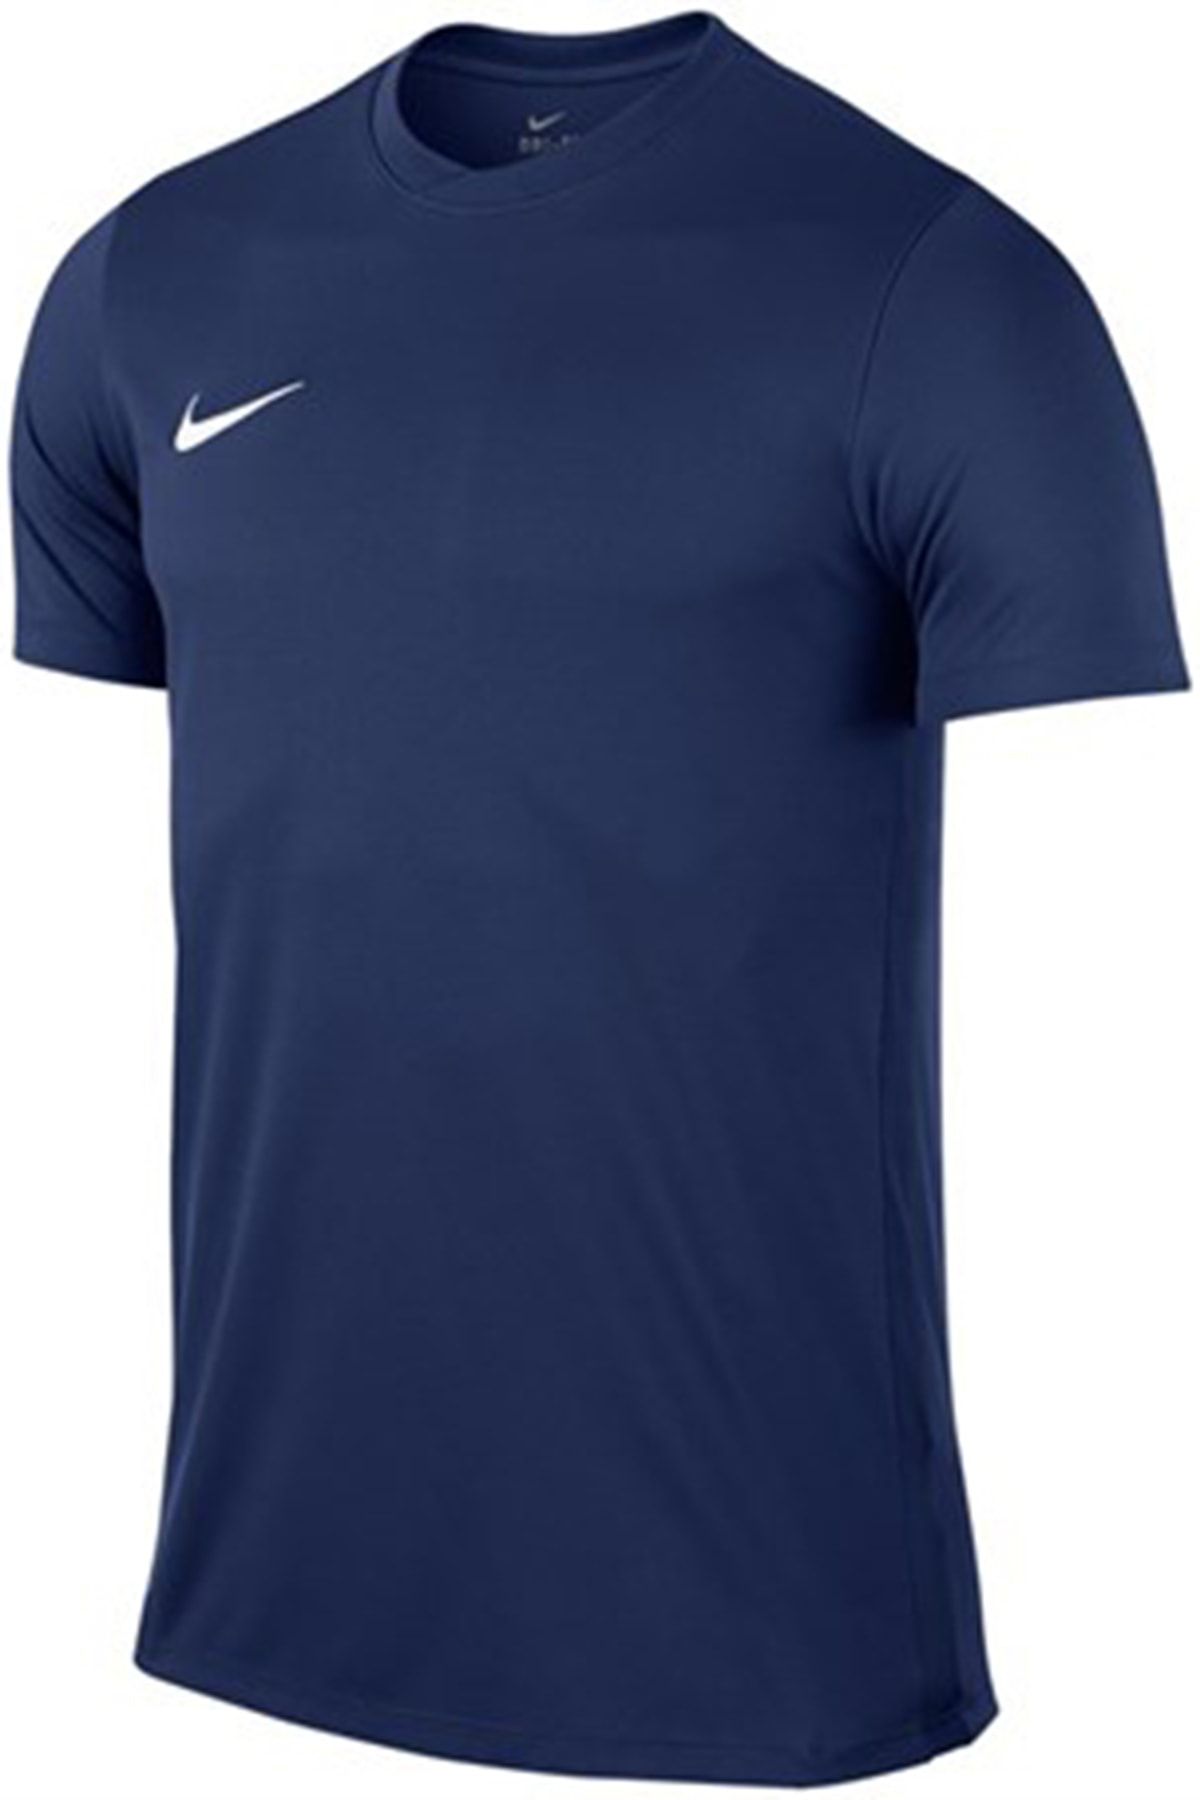 Nike Erkek Lacivert Spor T-Shirt 725891-410